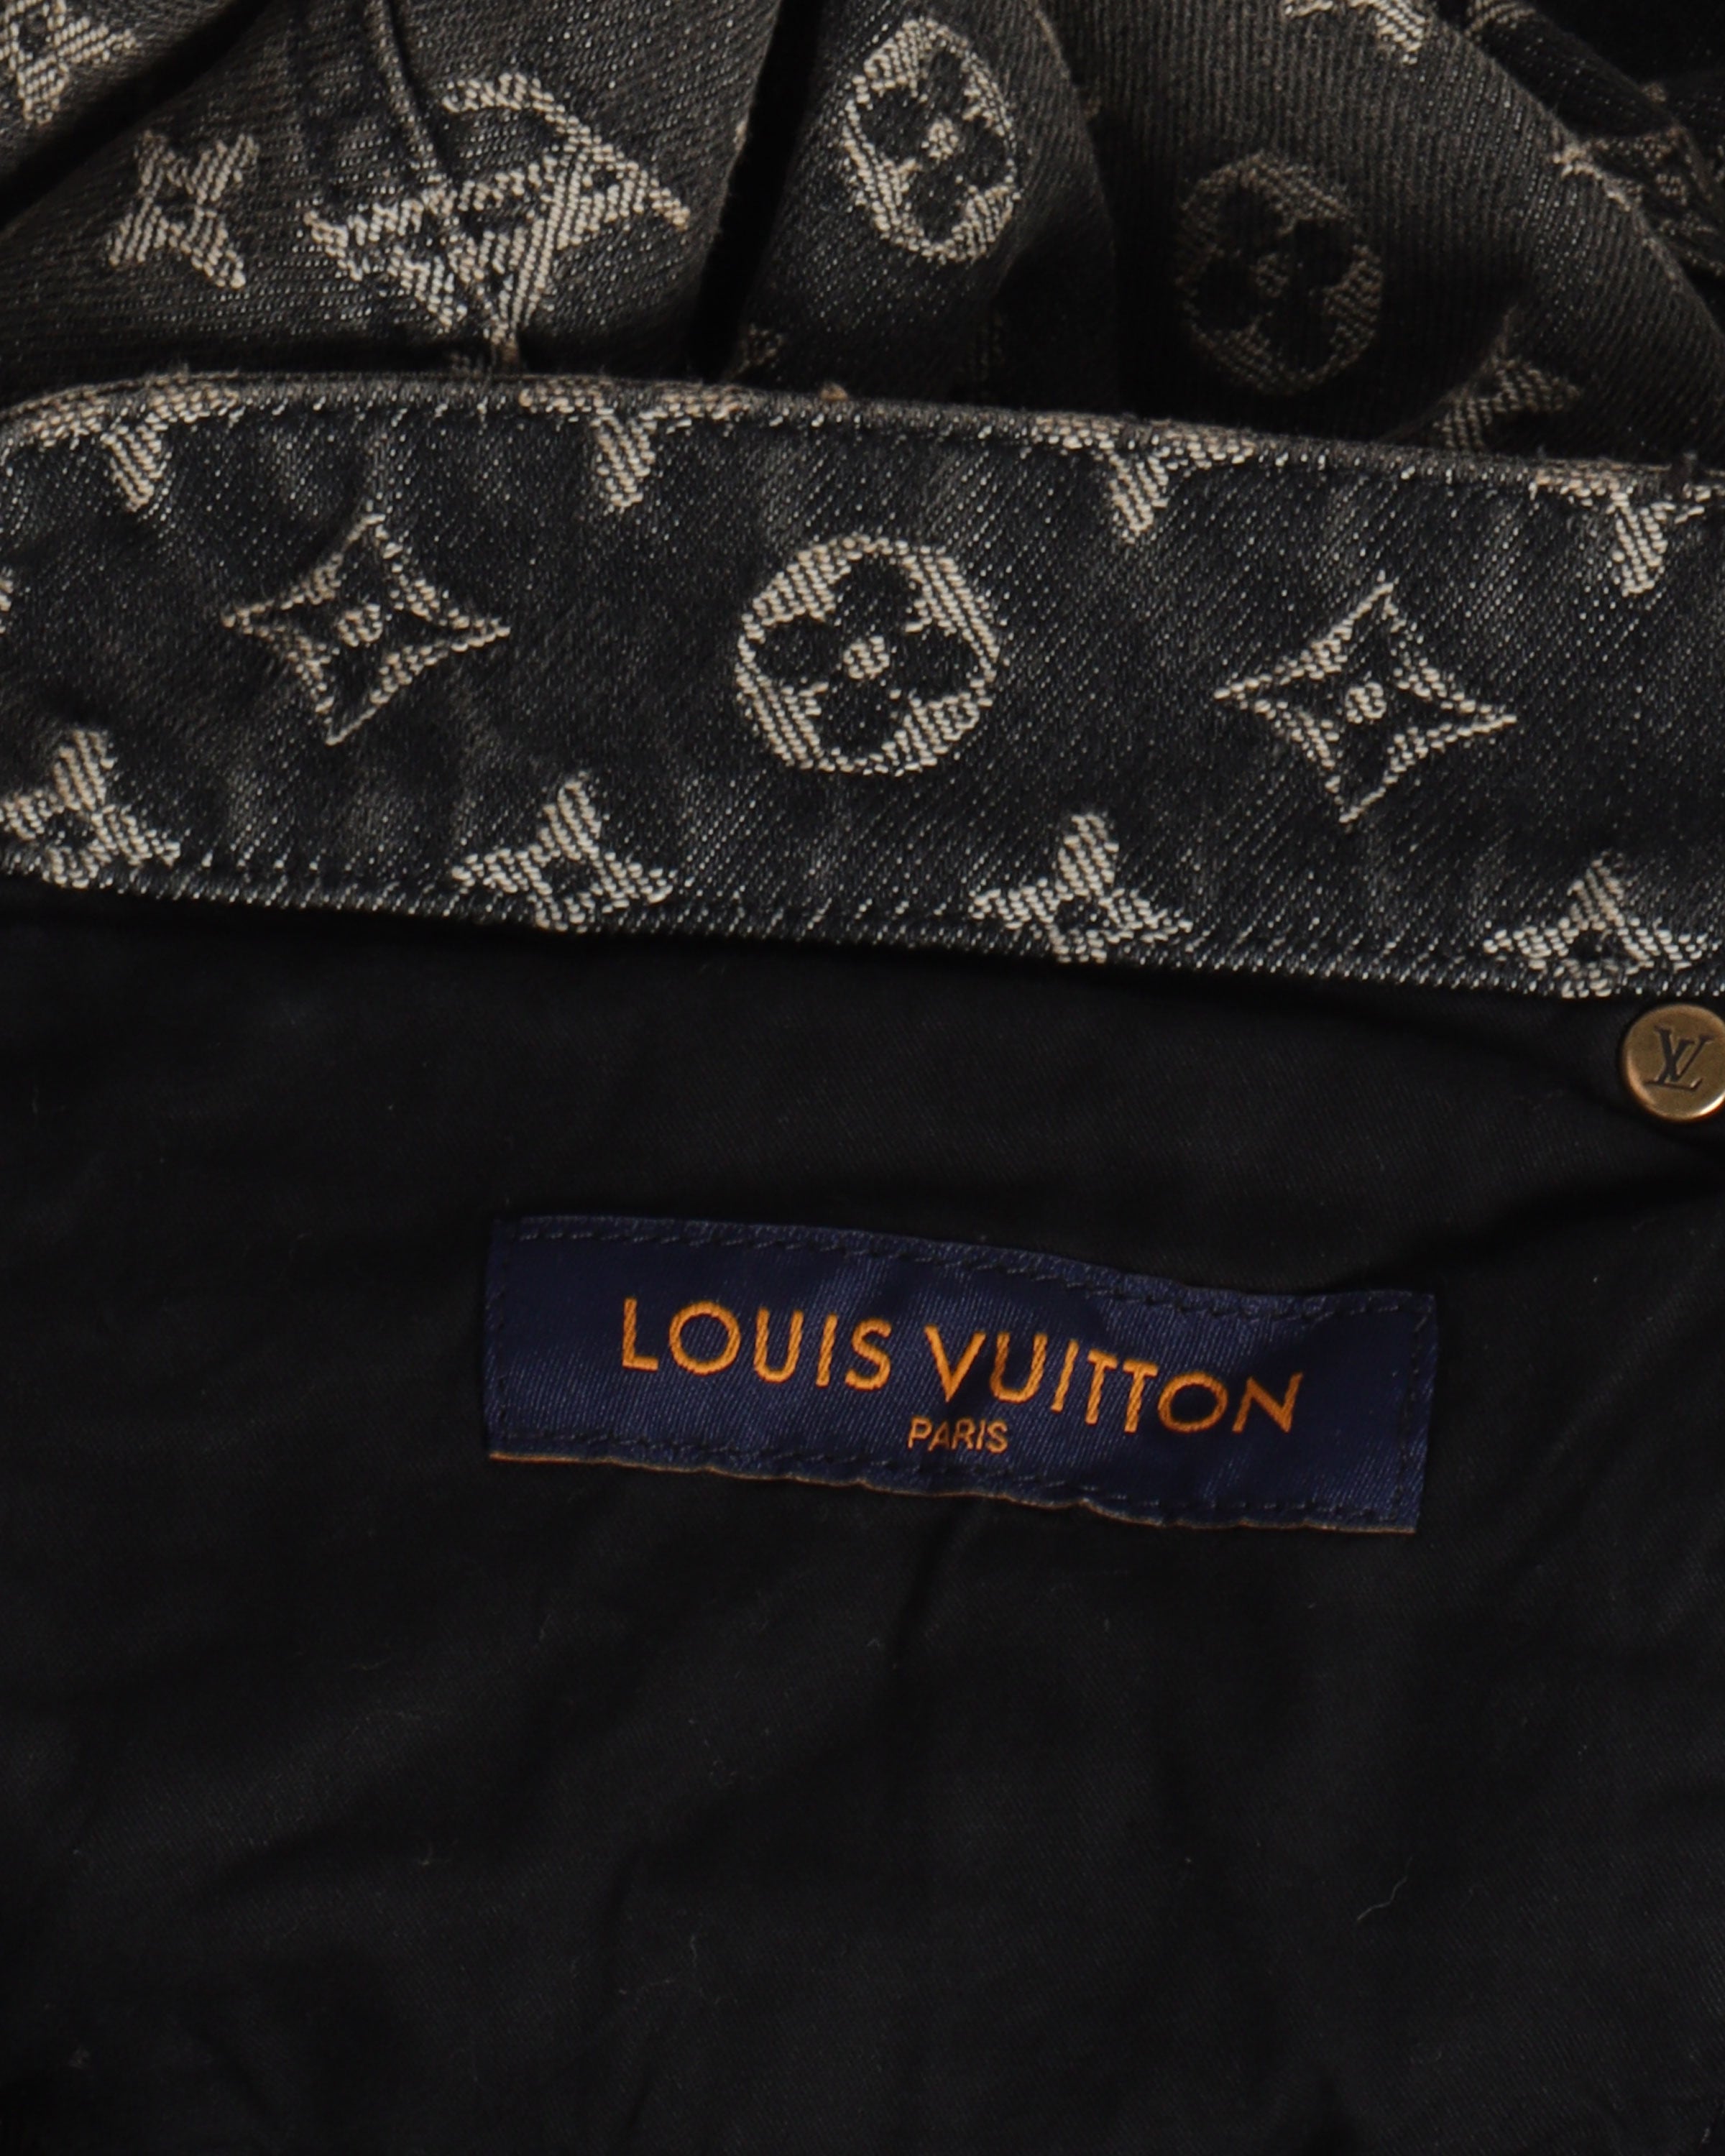 Louis vuitton distressed jeans